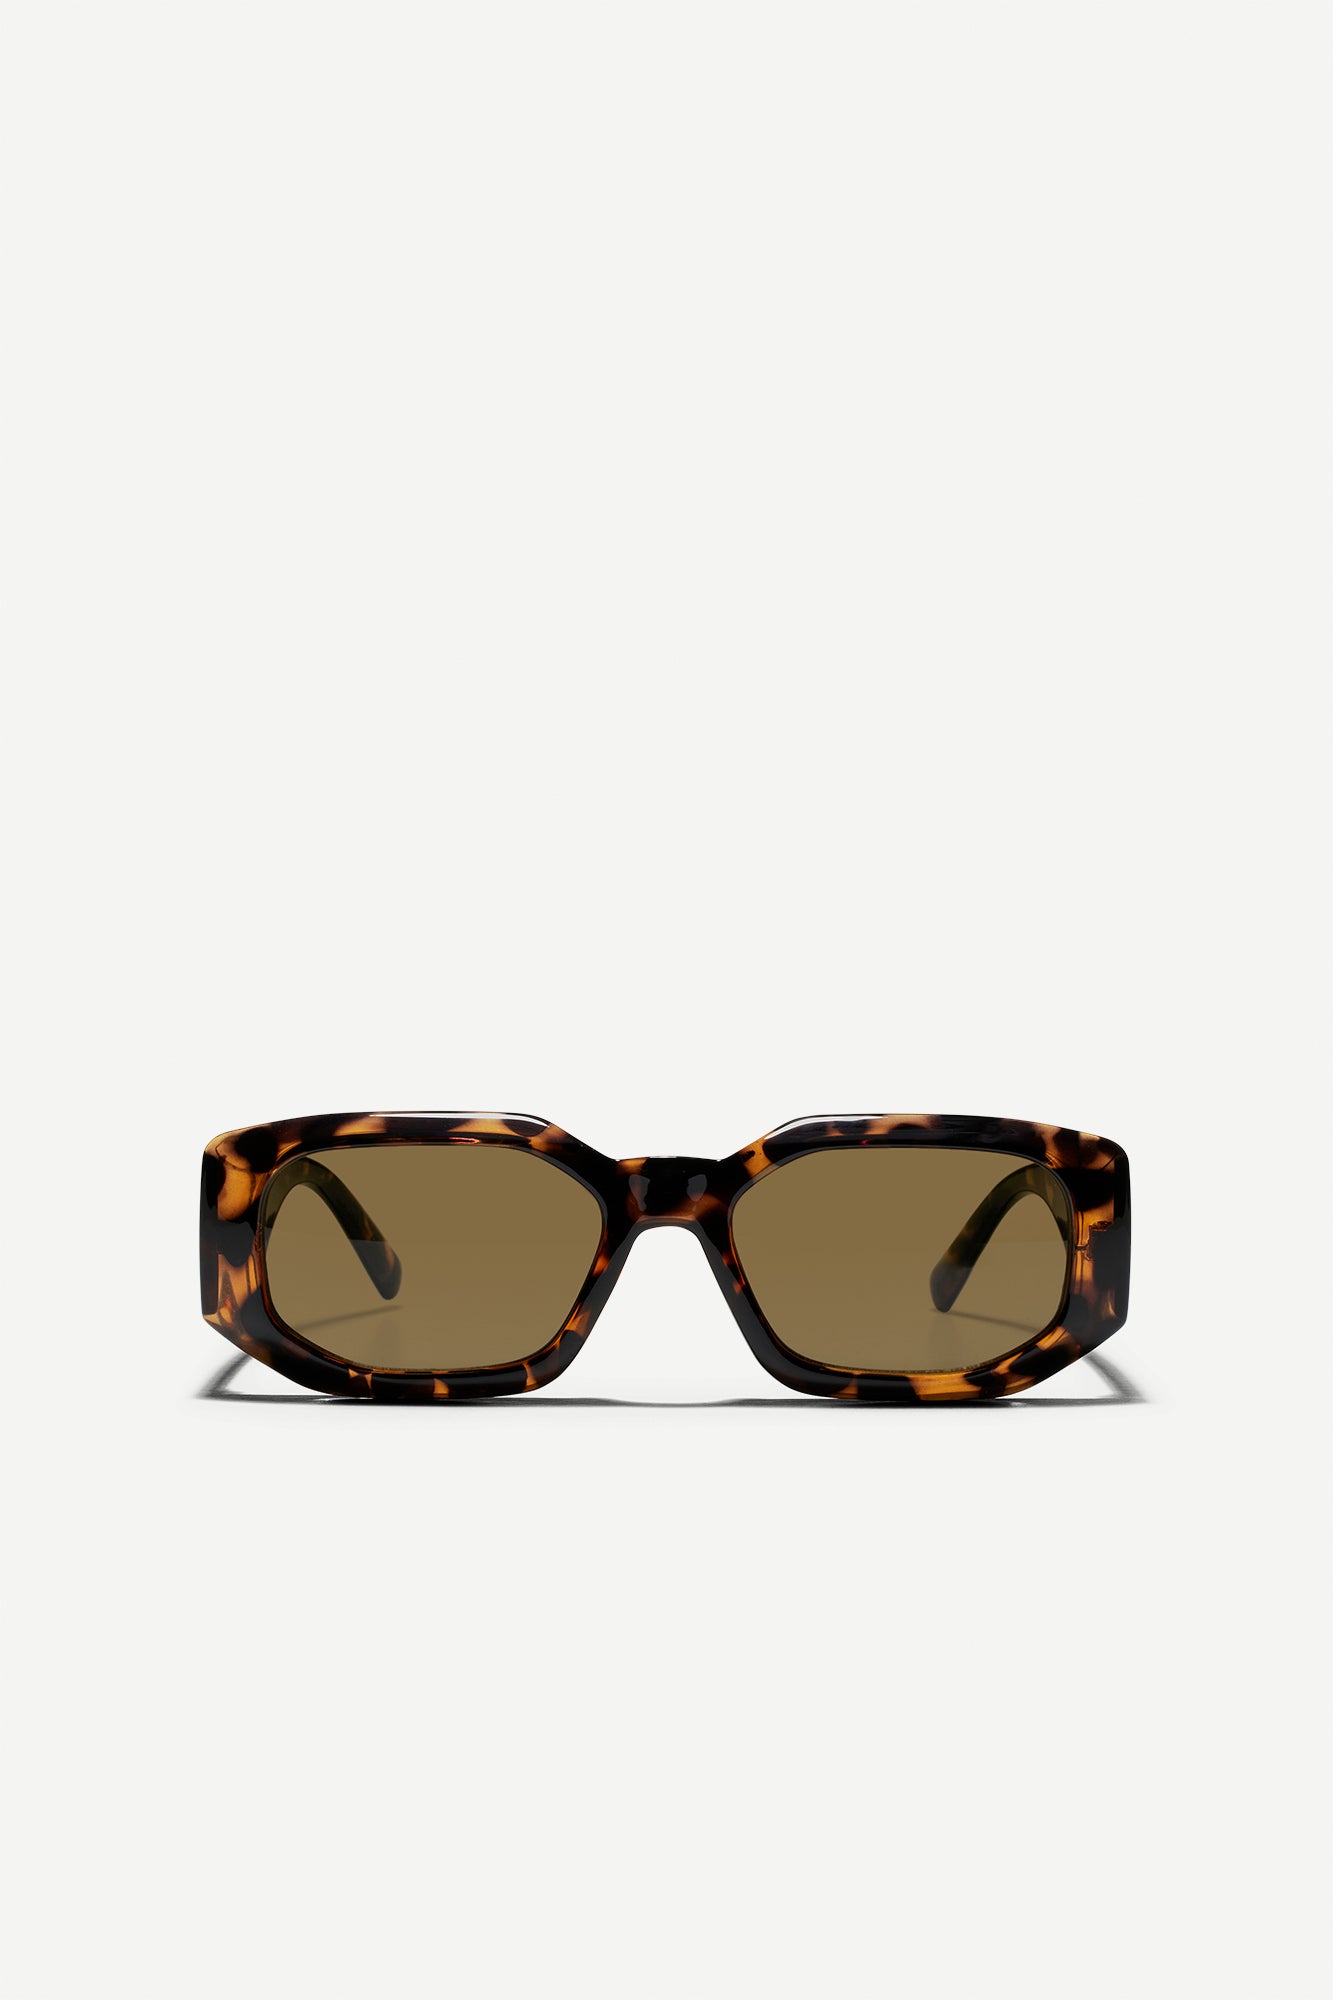 sunglasses Milo tortoise brown